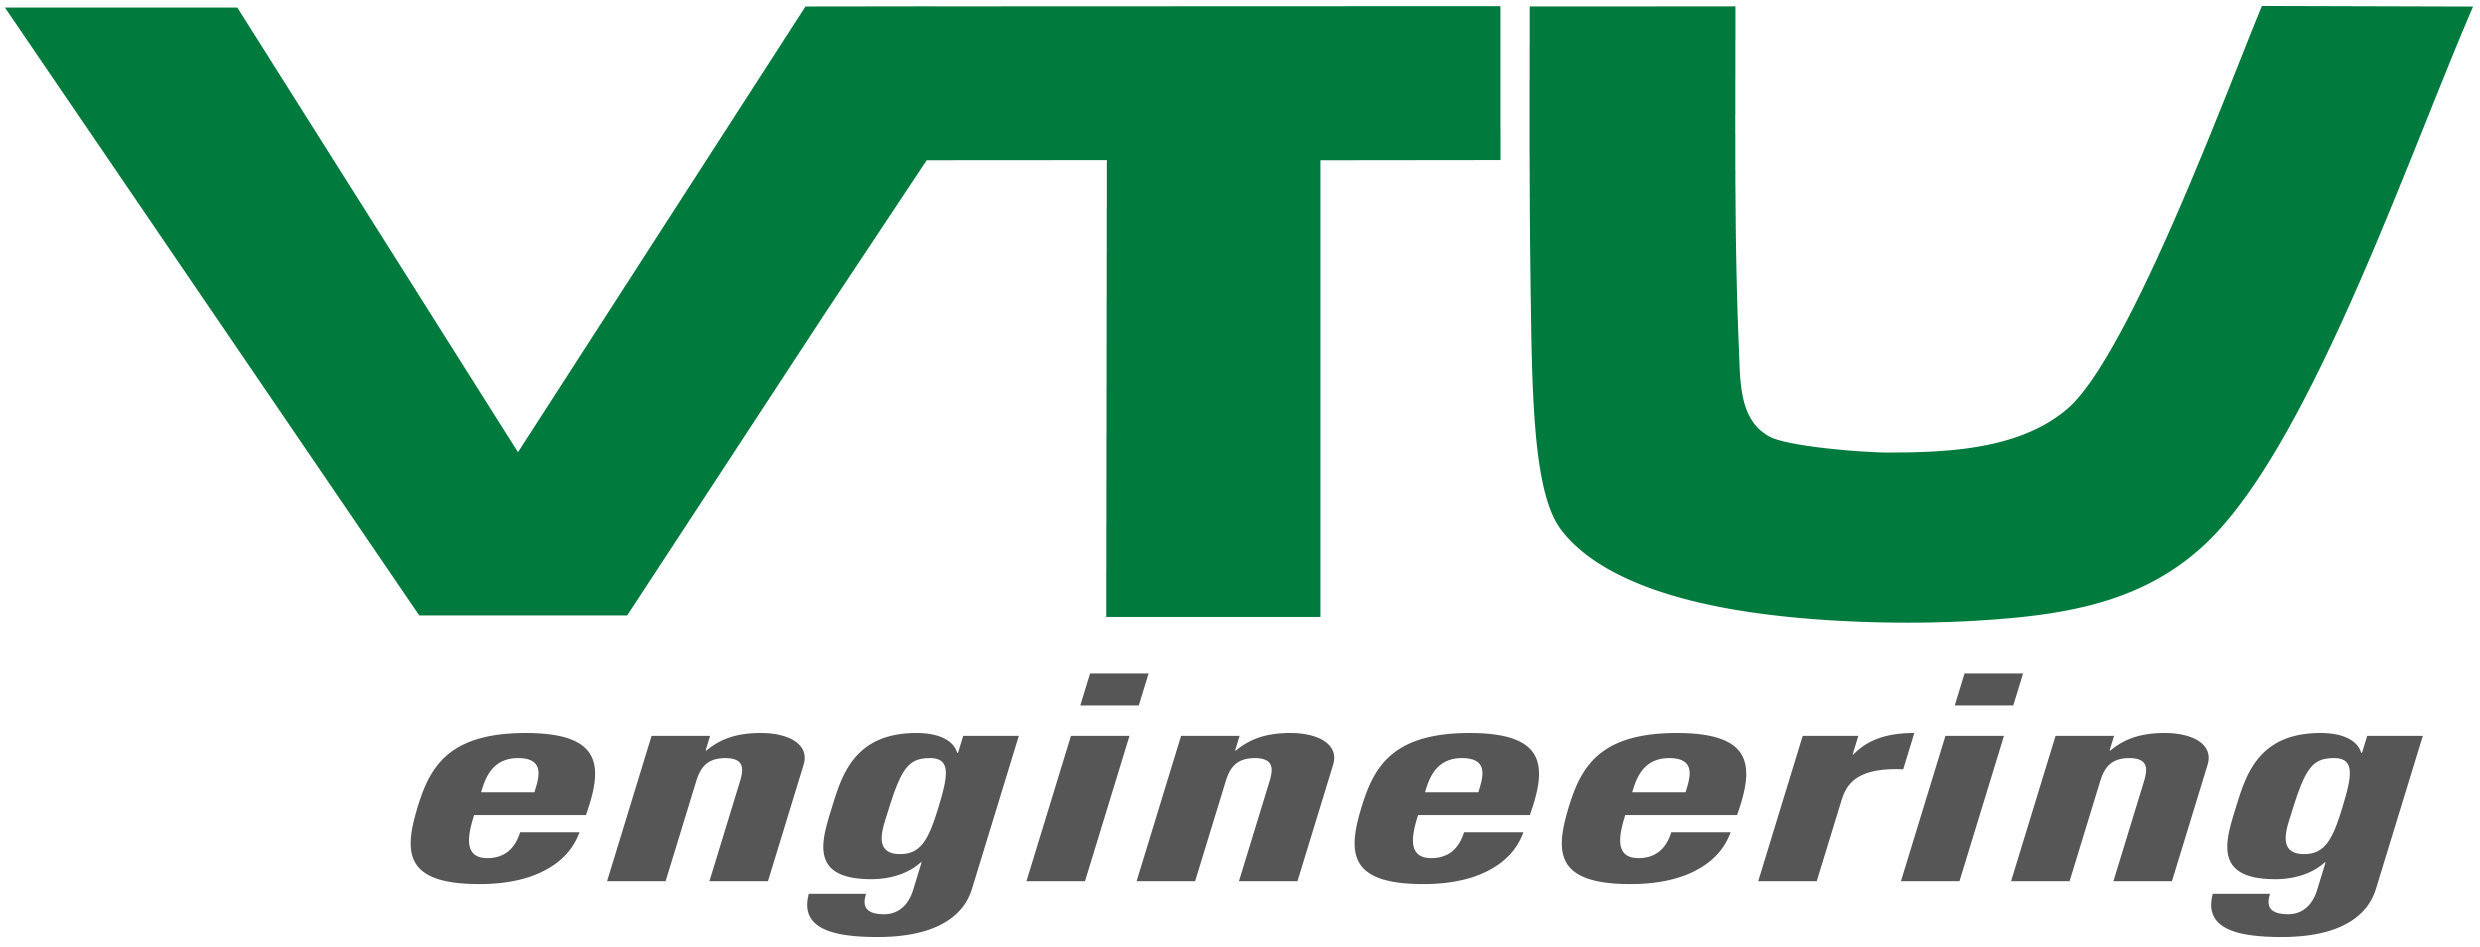 VTU engineering